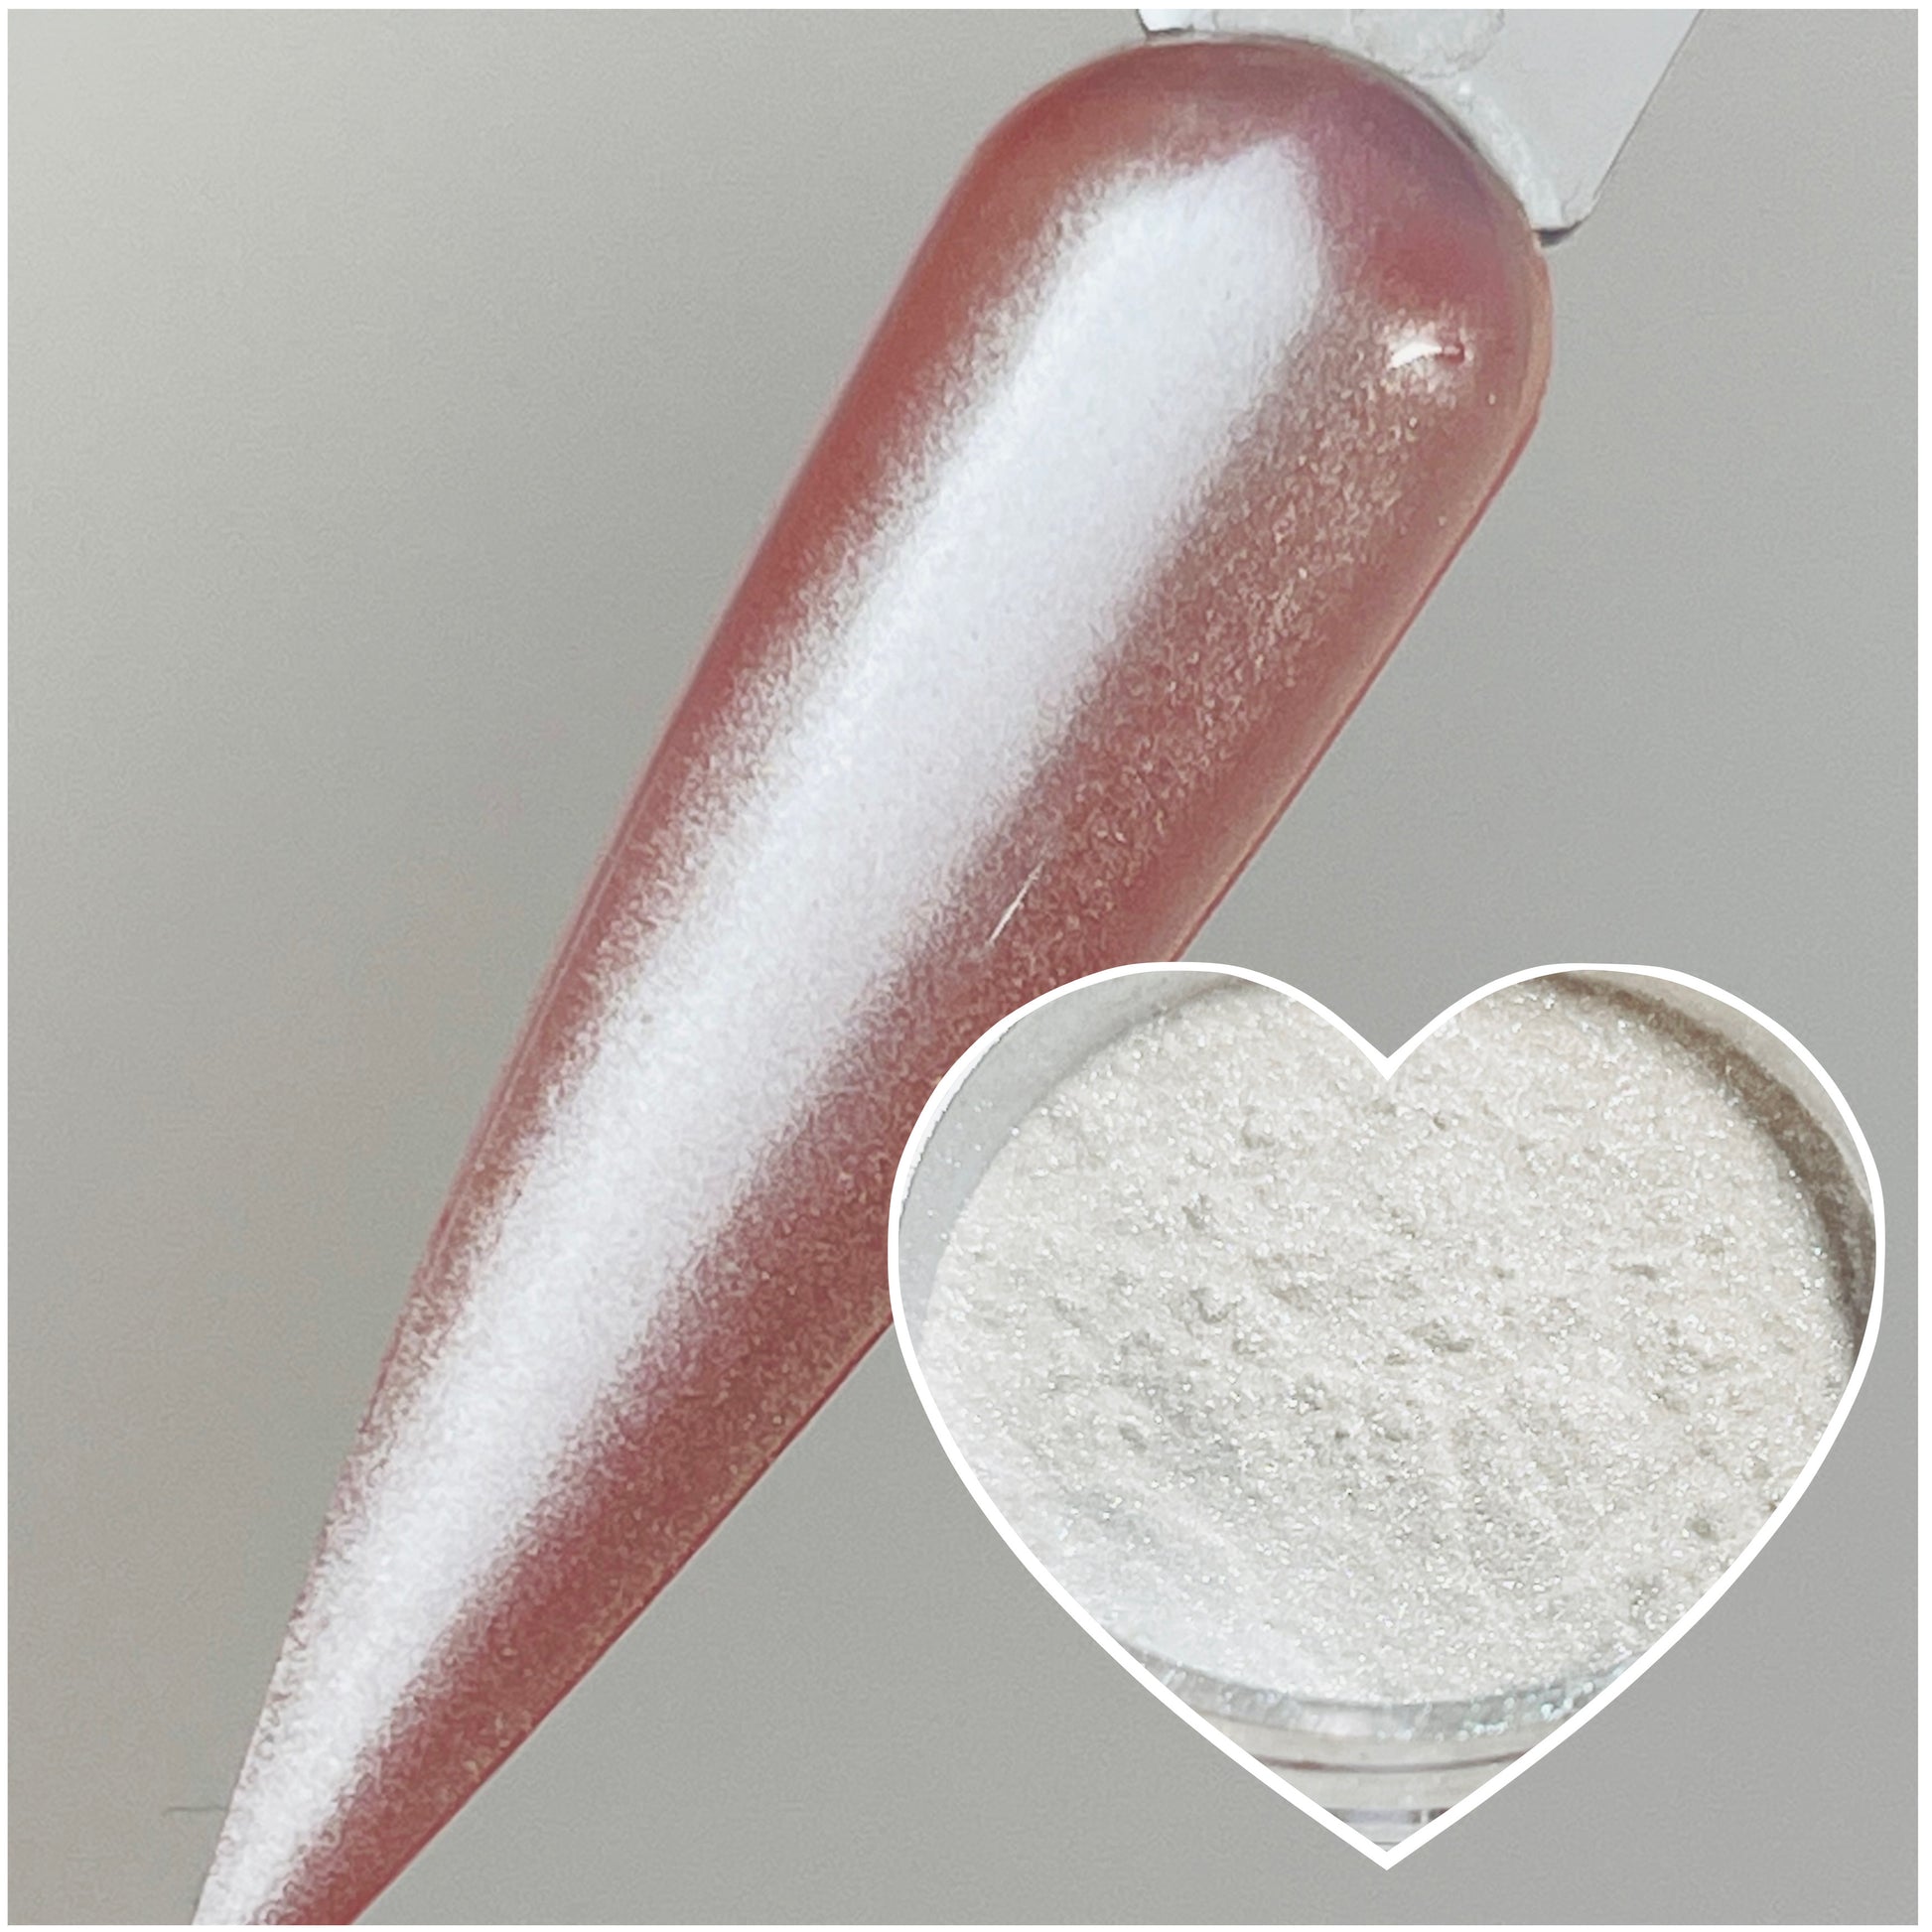 Turlyxie 2 White Chrome Nail Powder, Pearl Chrome Powder with Pearl Sh –  TweezerCo